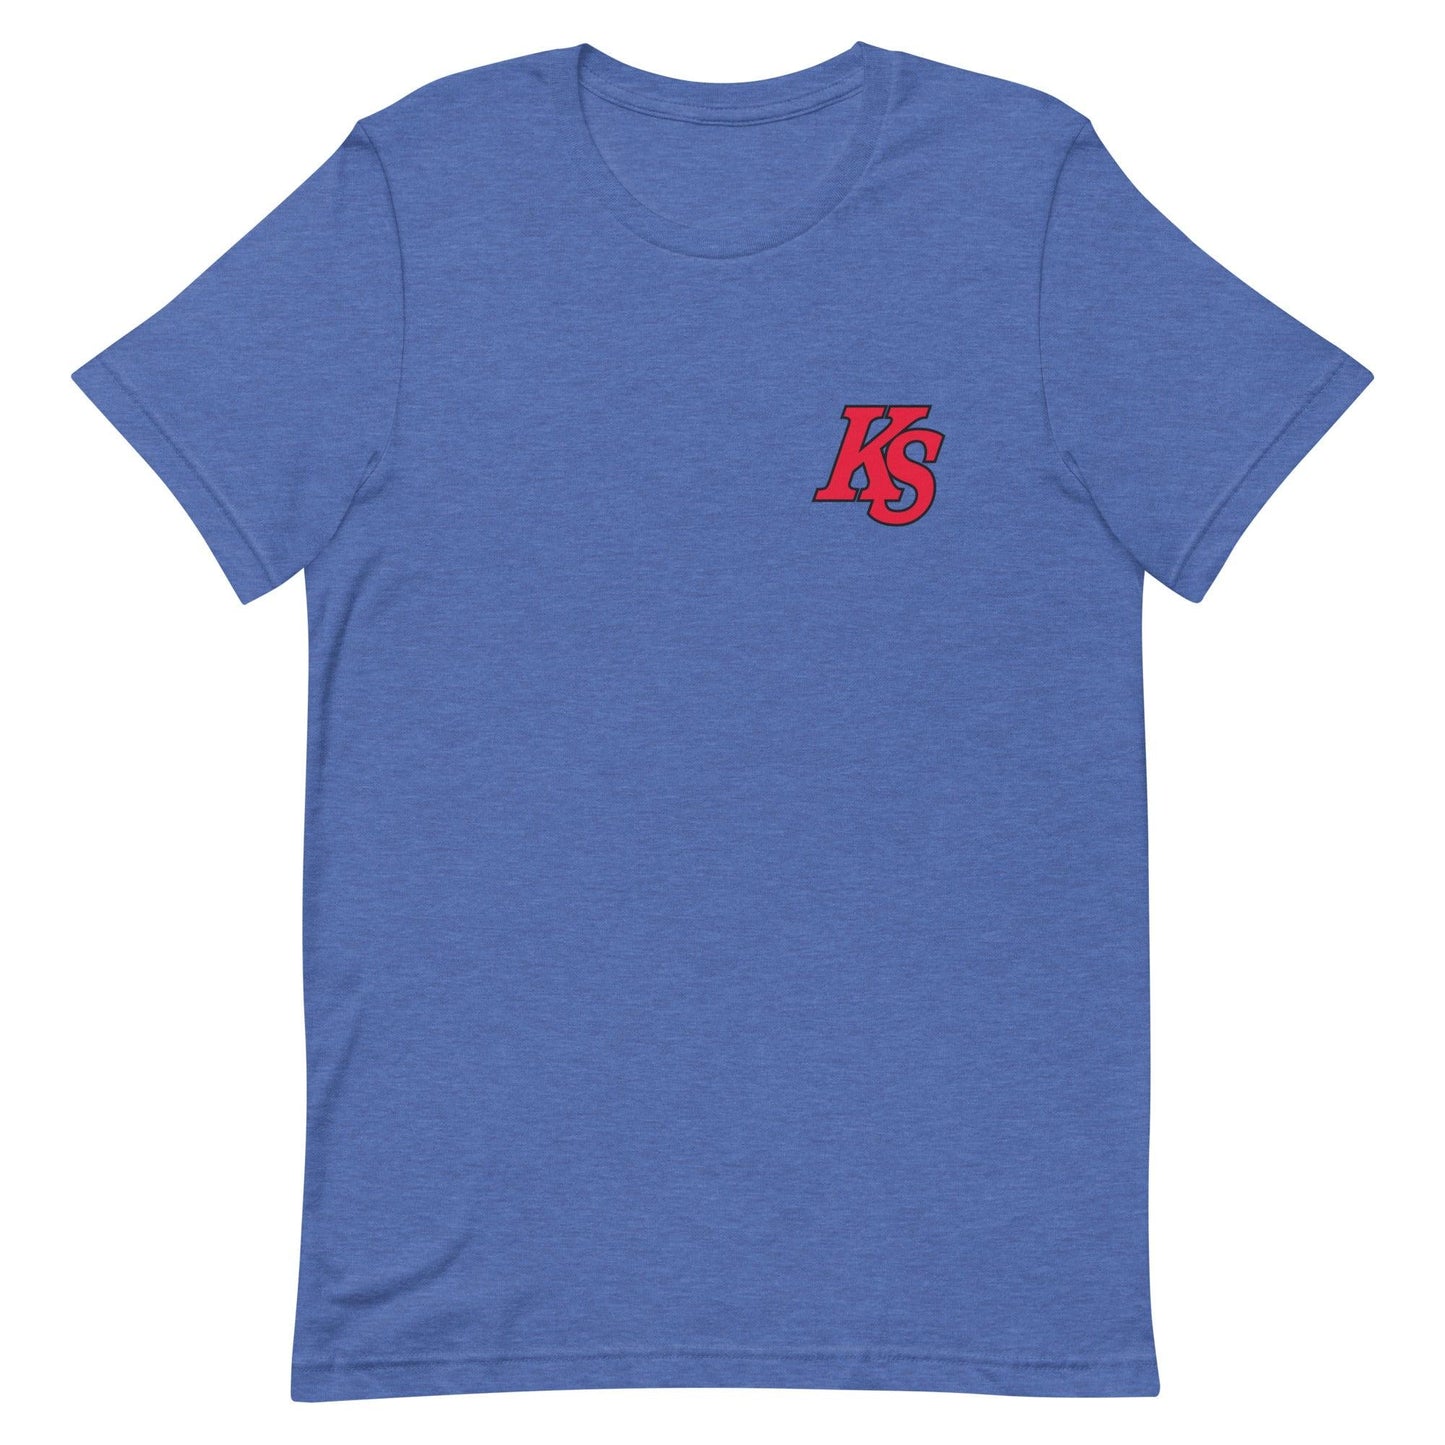 Kaylene Smikle "Essential" t-shirt - Fan Arch